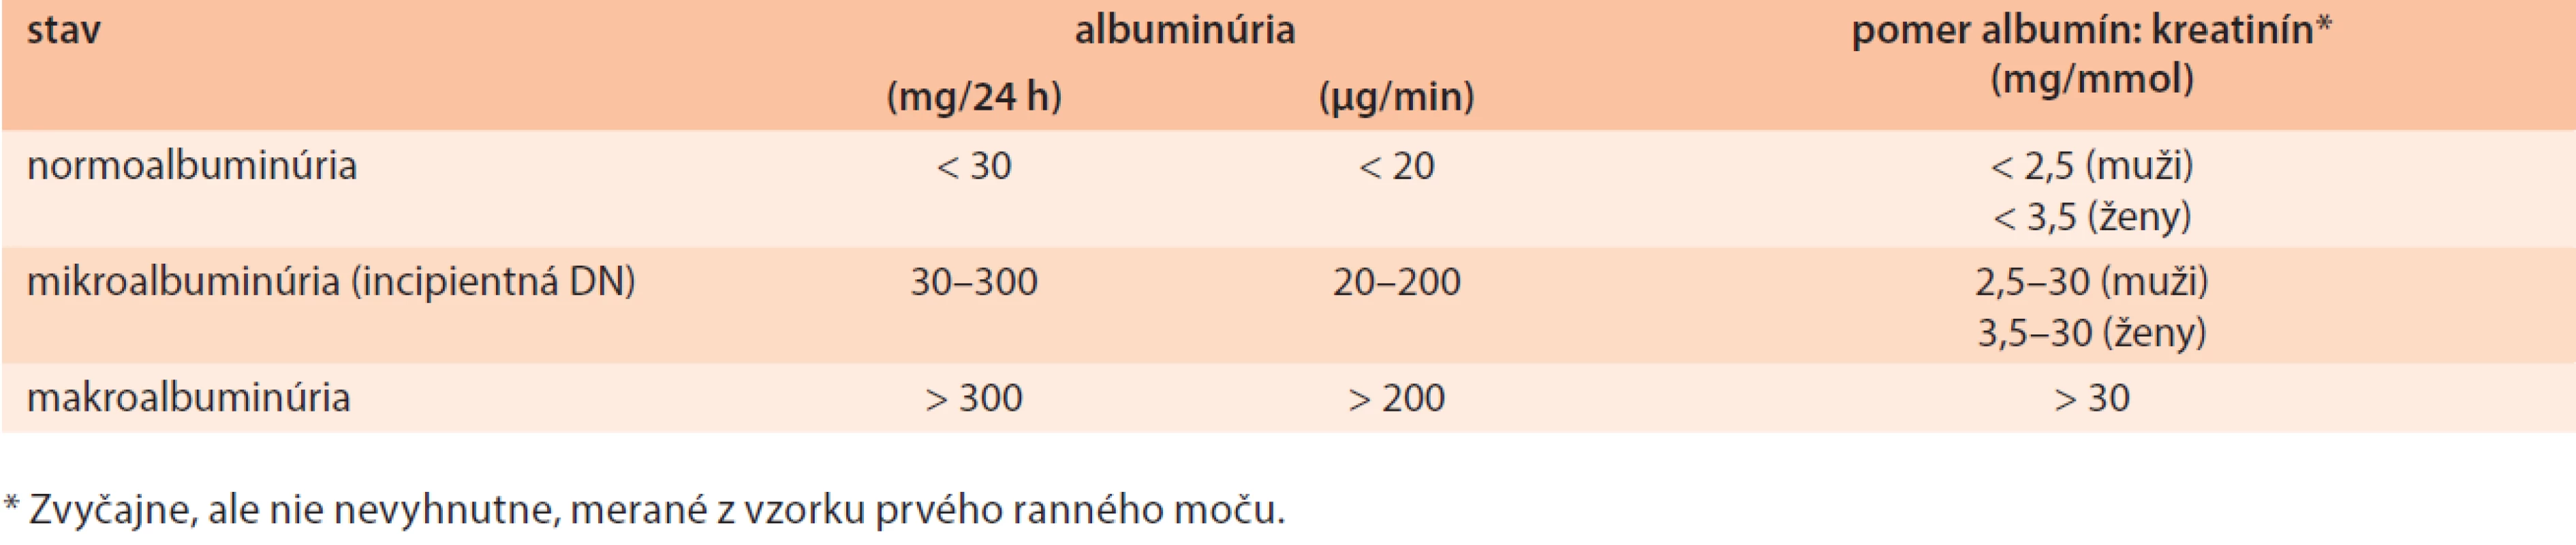 Diagnostické defi nície albuminúrie